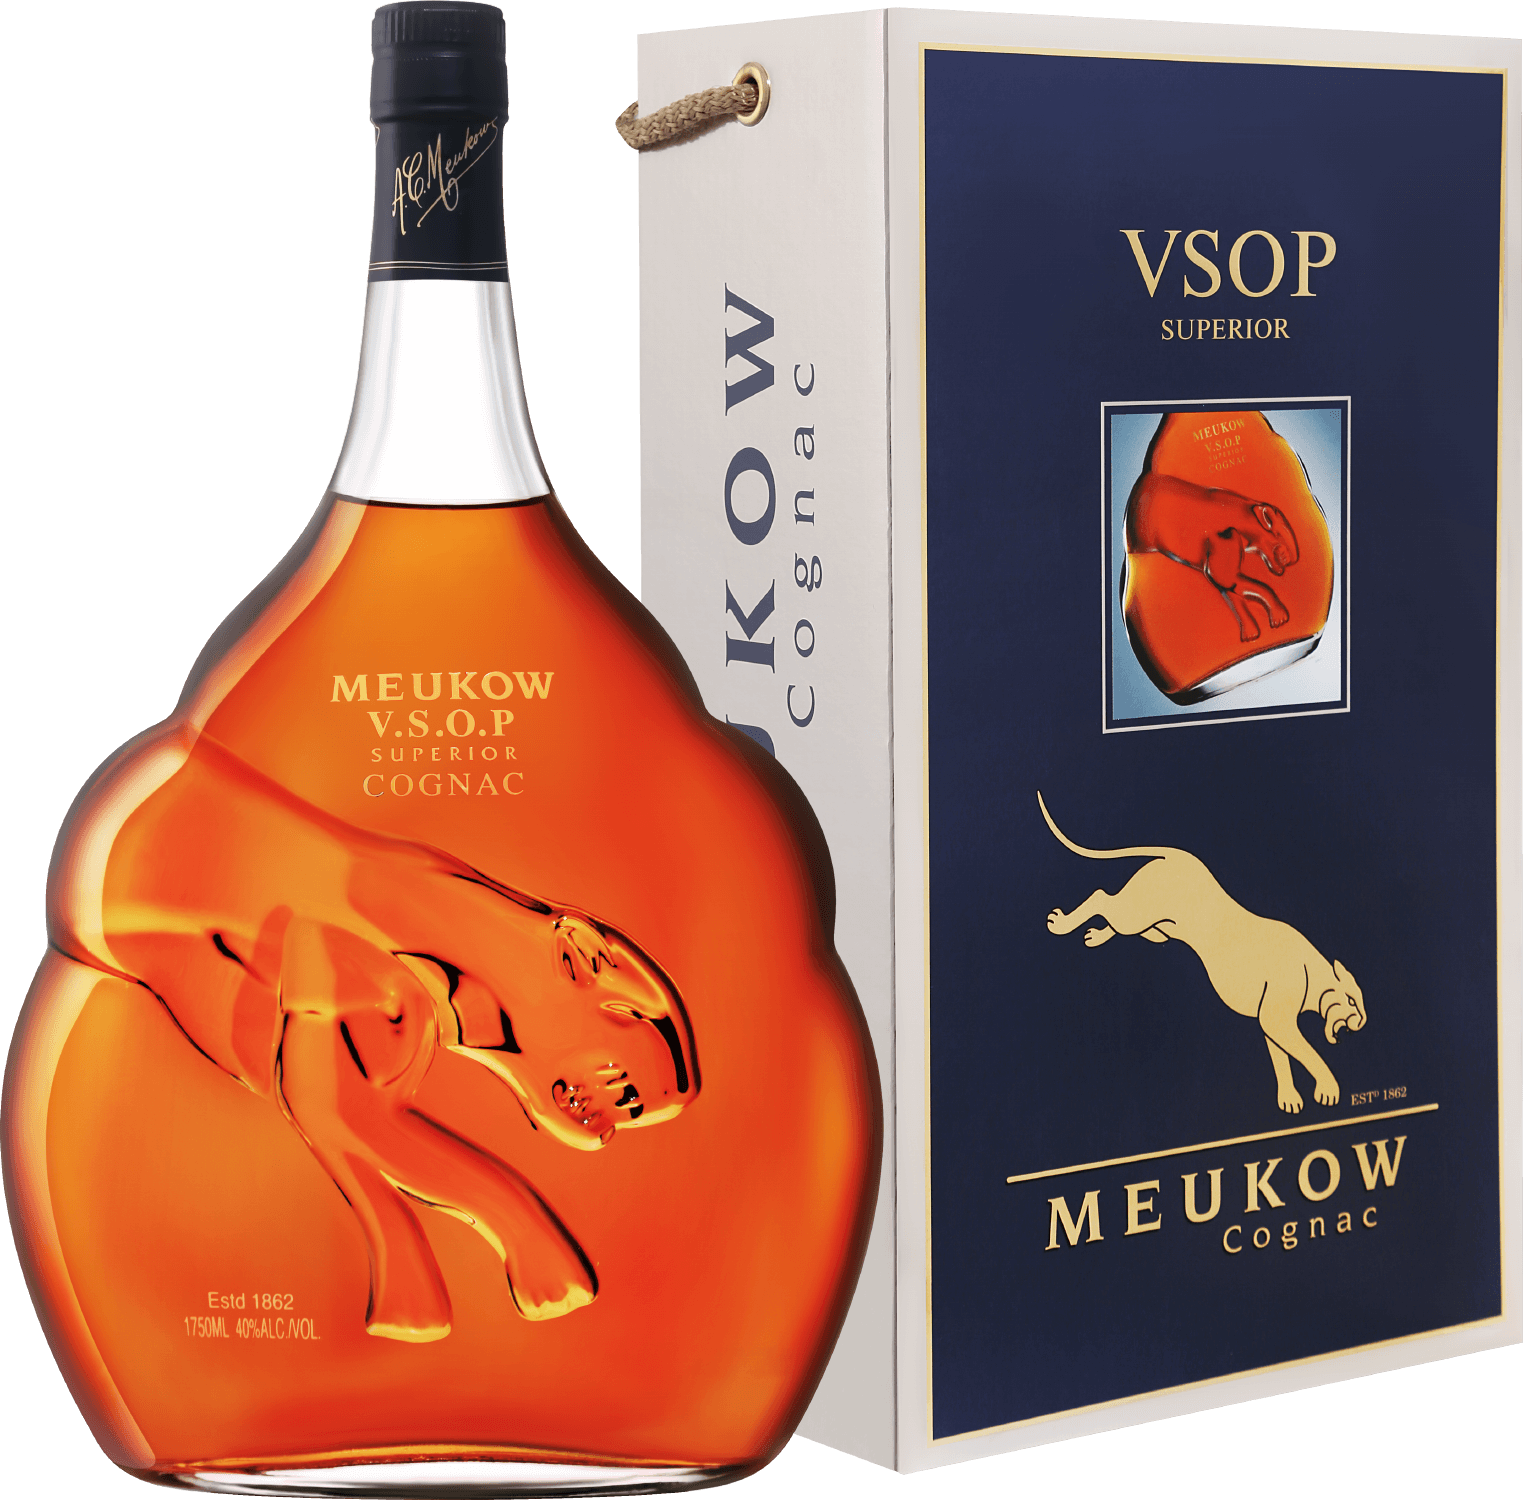 Meukow Cognac VSOP Superior (gift box) meukow cognac vs gift box